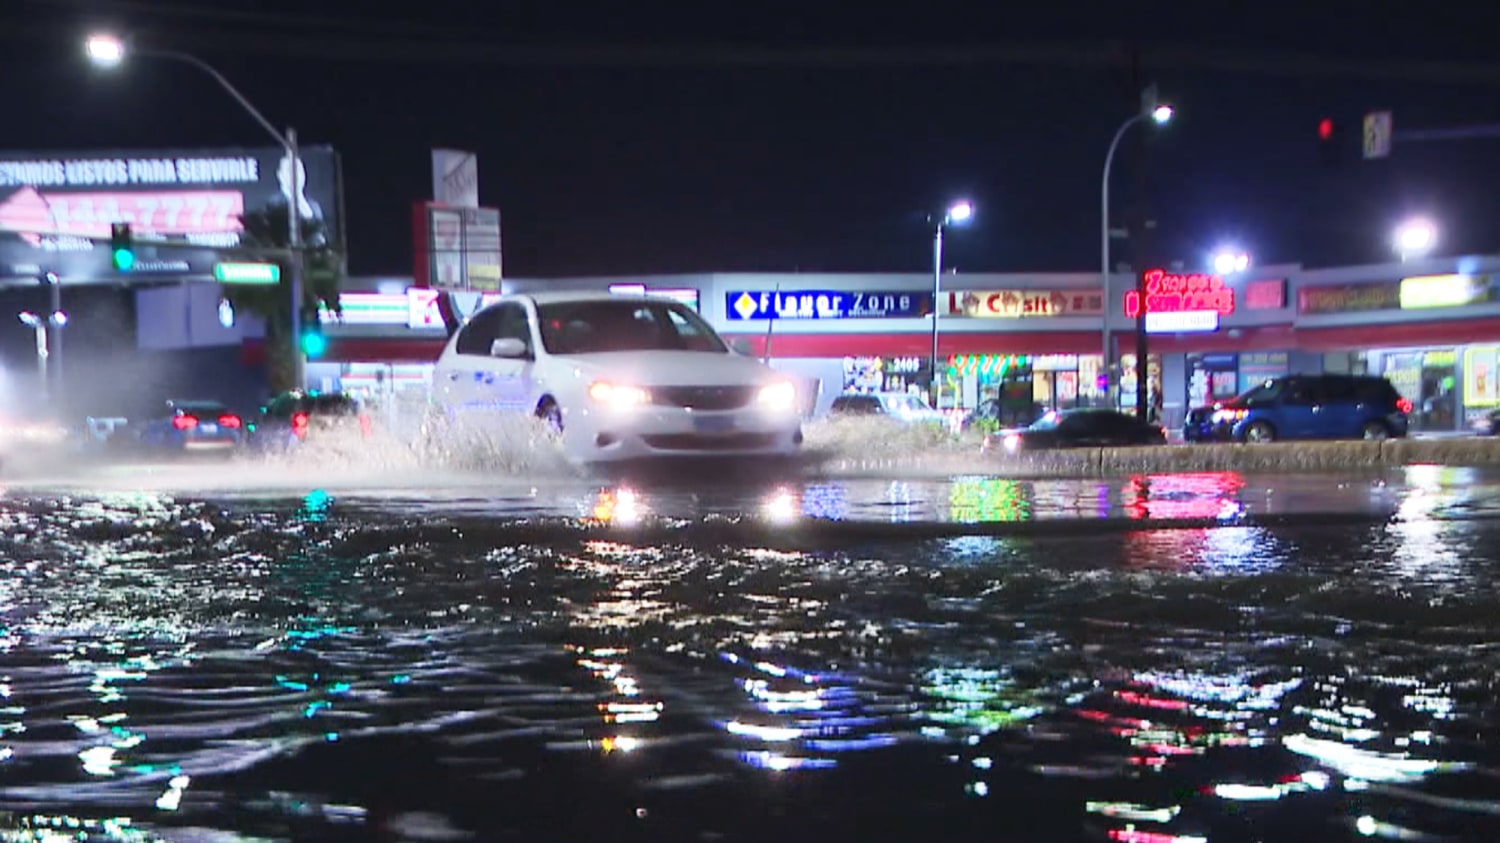 Monsoonal rains flood streets and casinos in Las Vegas